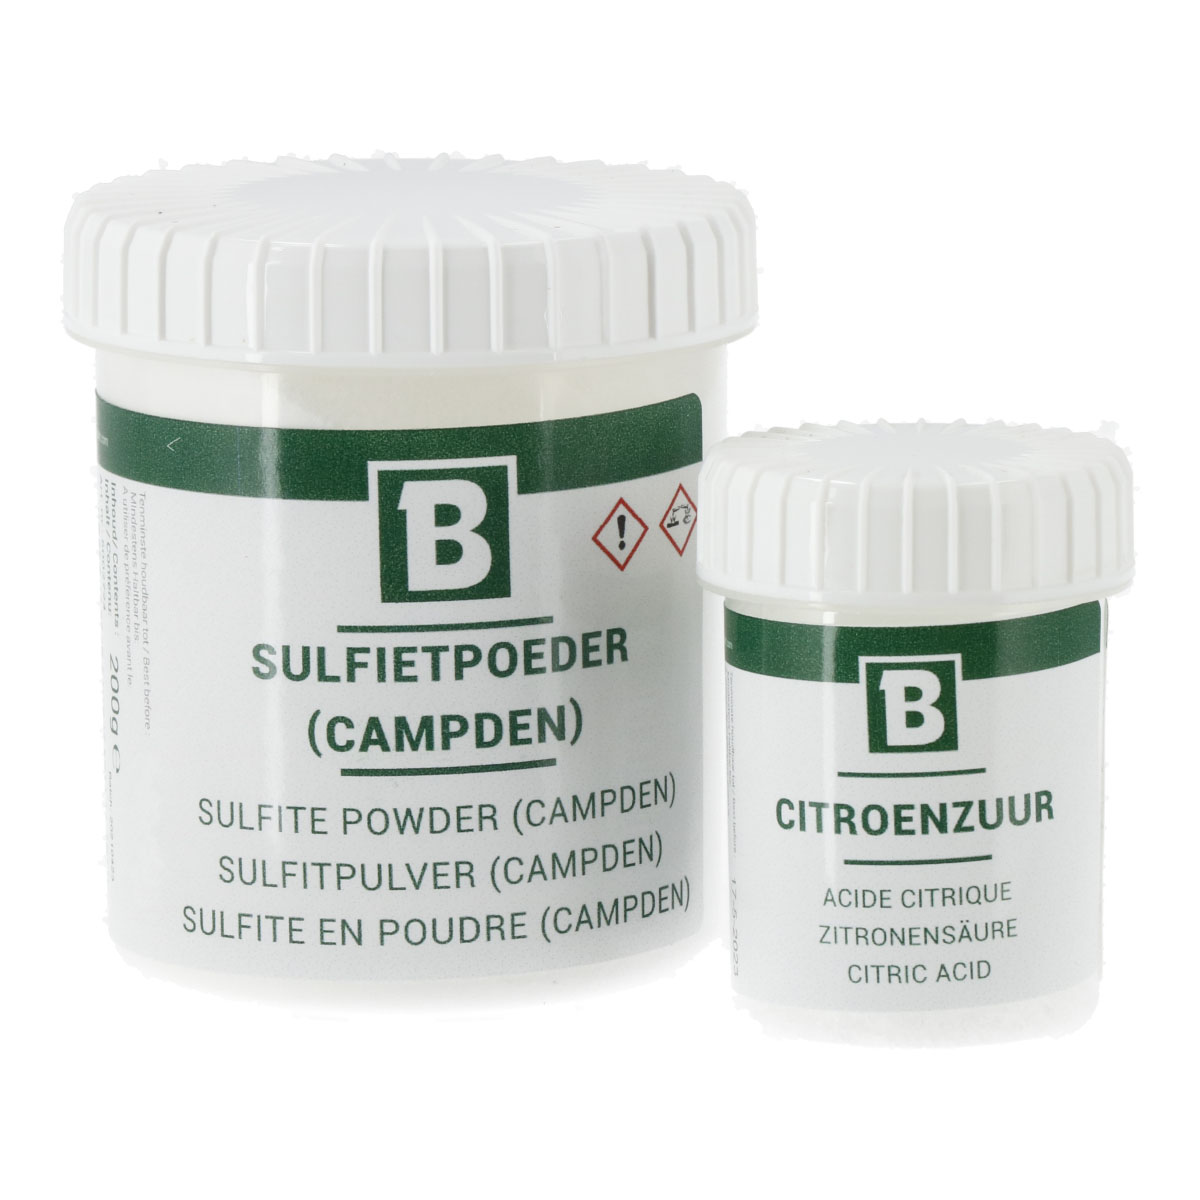 Sulfite powder & Citric acid Cleaning-set 